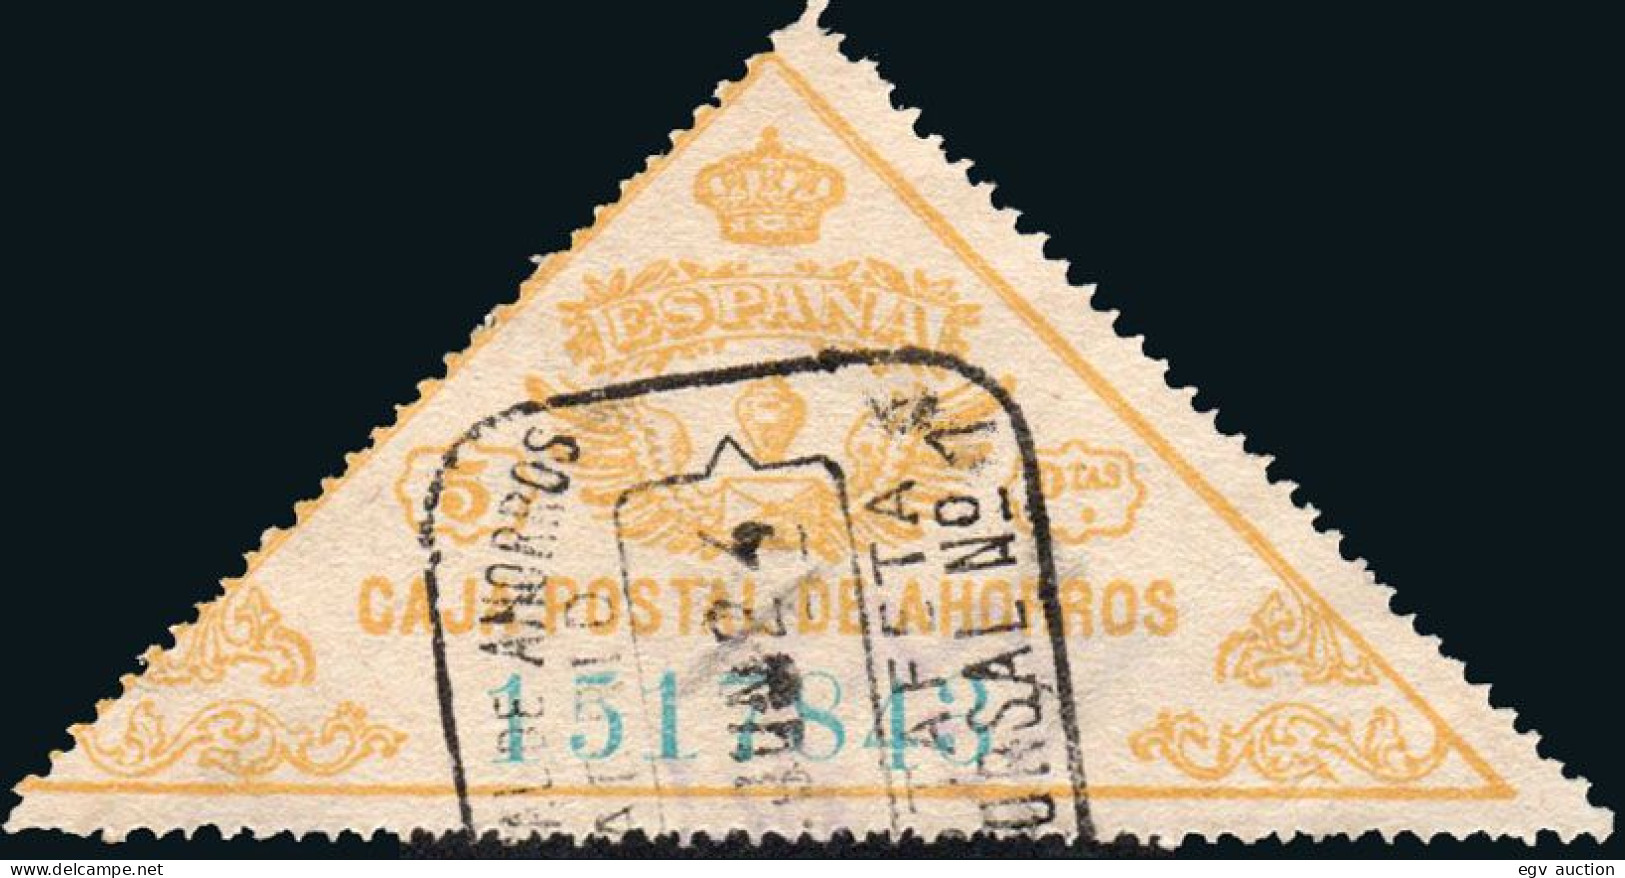 Madrid - Caja Postal Ahorros - Gálvez O 5 - Mat "Estafeta Sucursal N.º 1 - Caja Postal Ahorros" - Fiscali